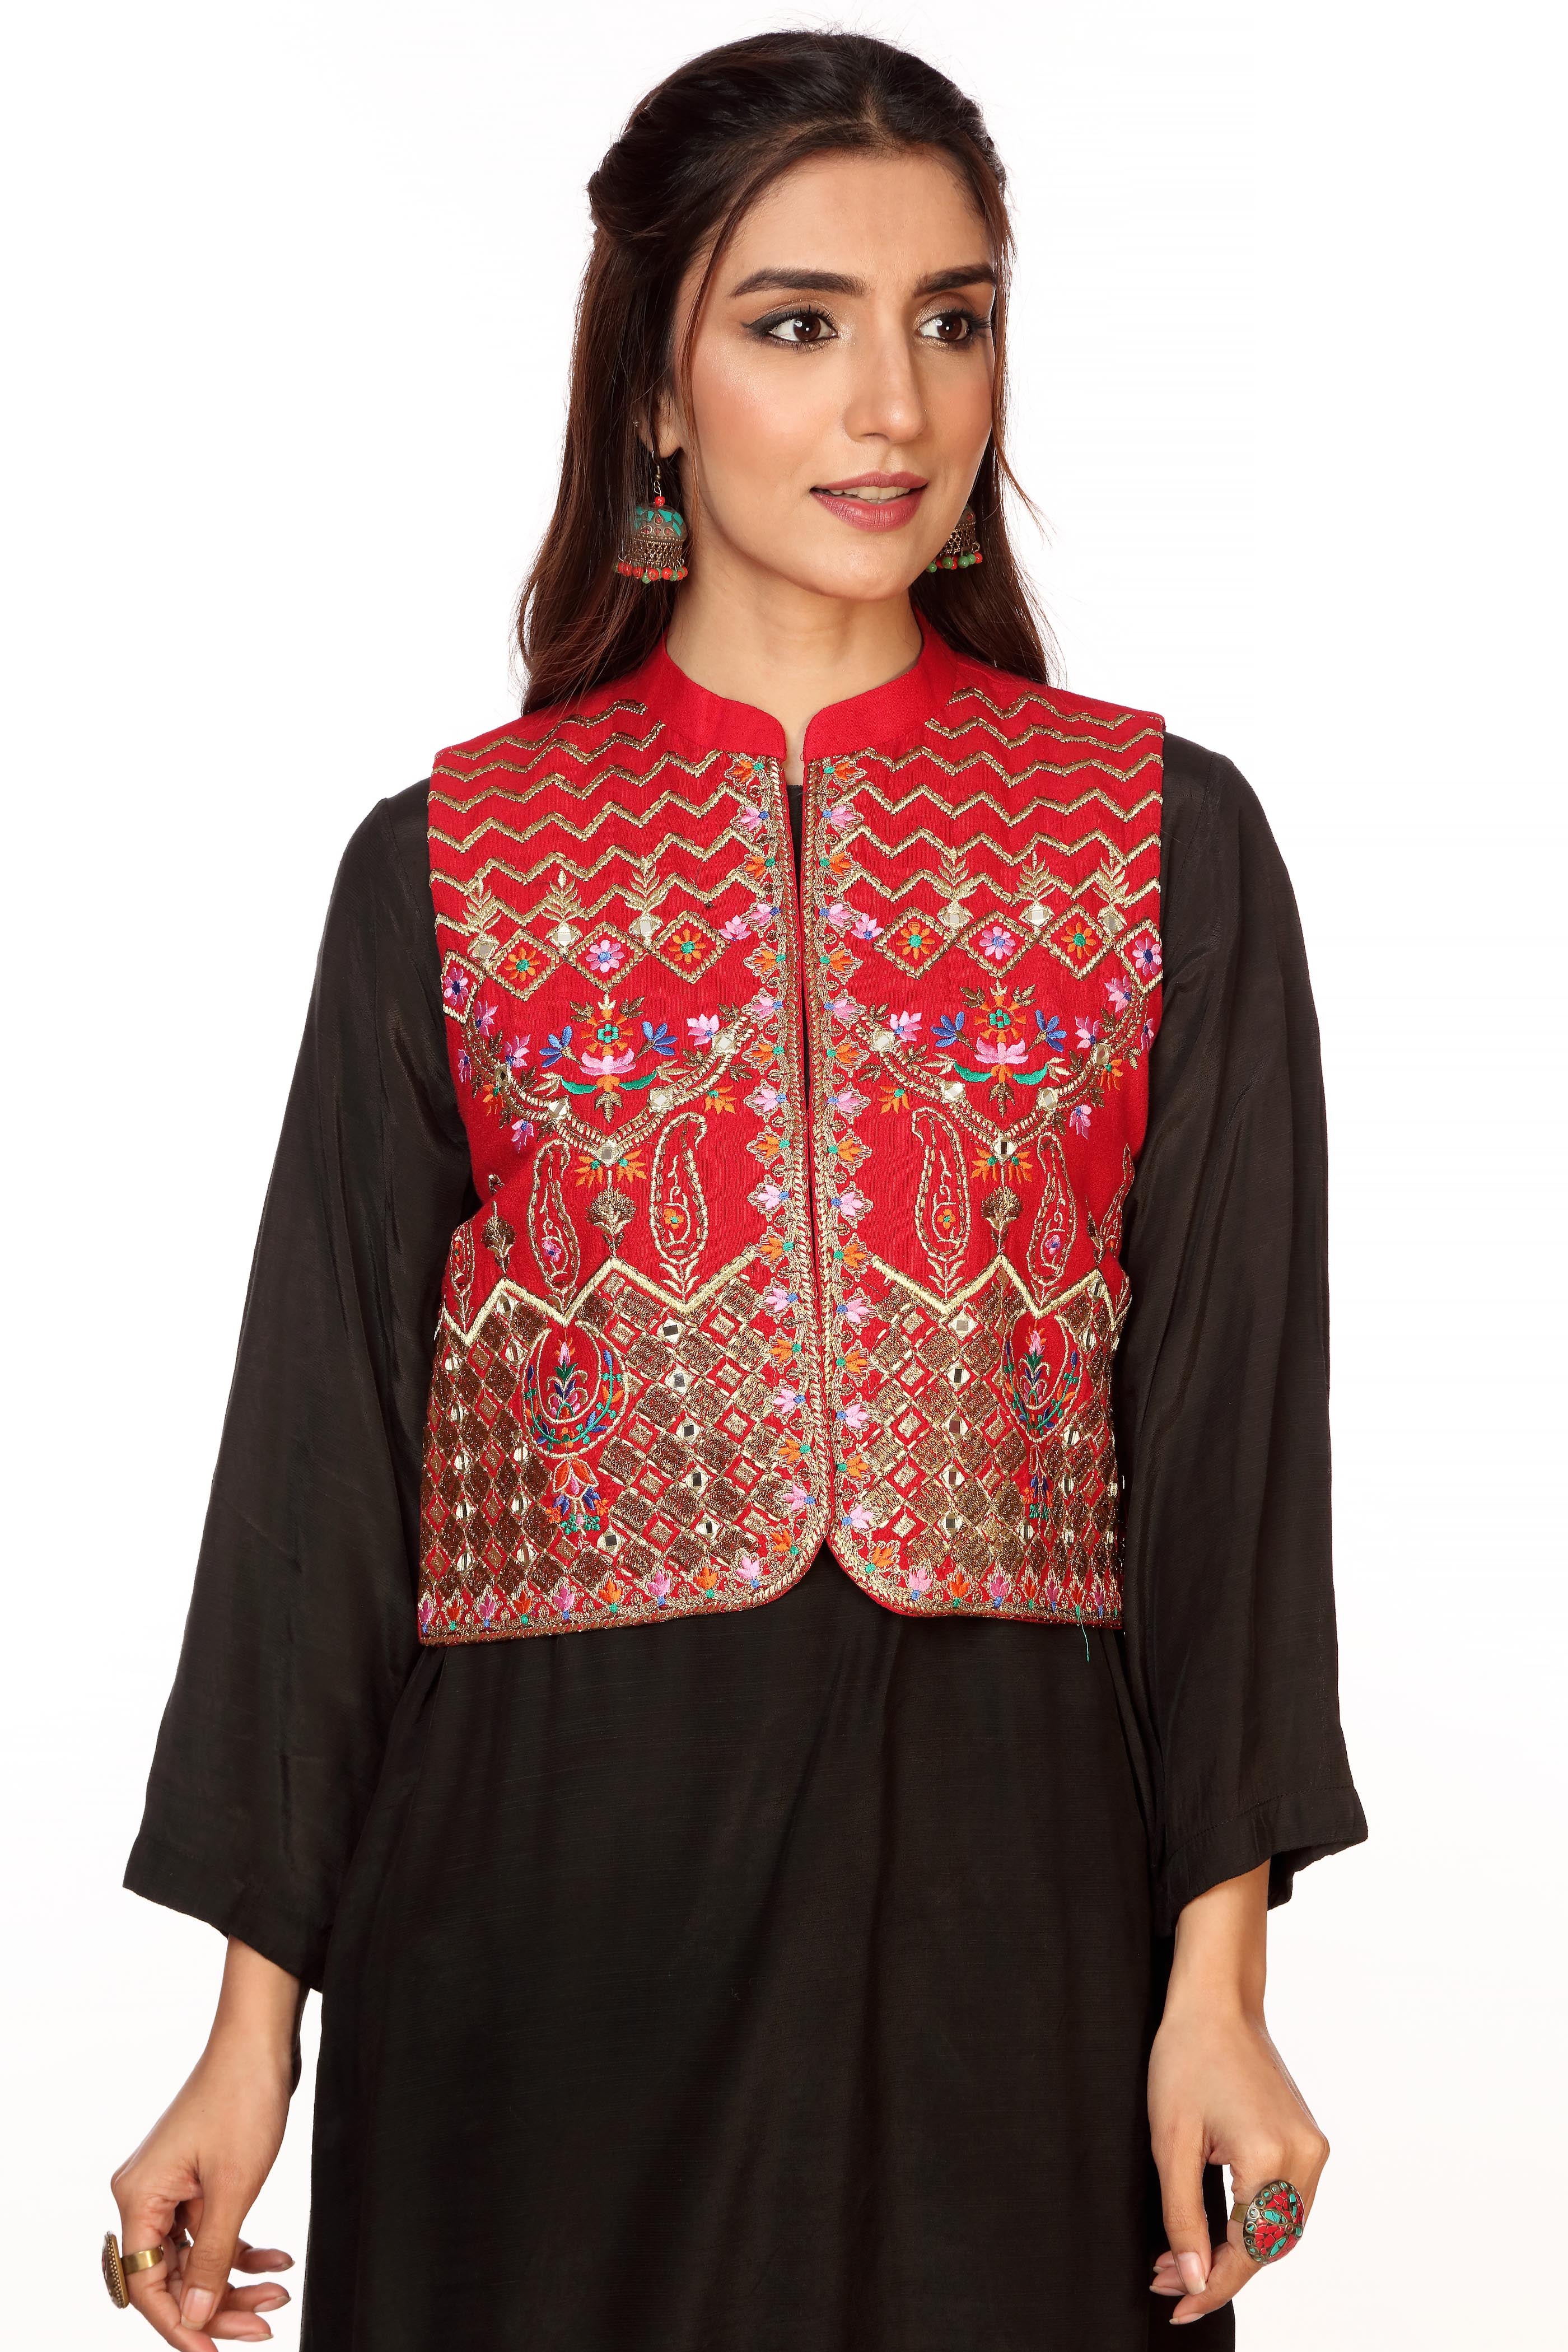 Coloured Tilla in Red coloured Lawn Karandi fabric